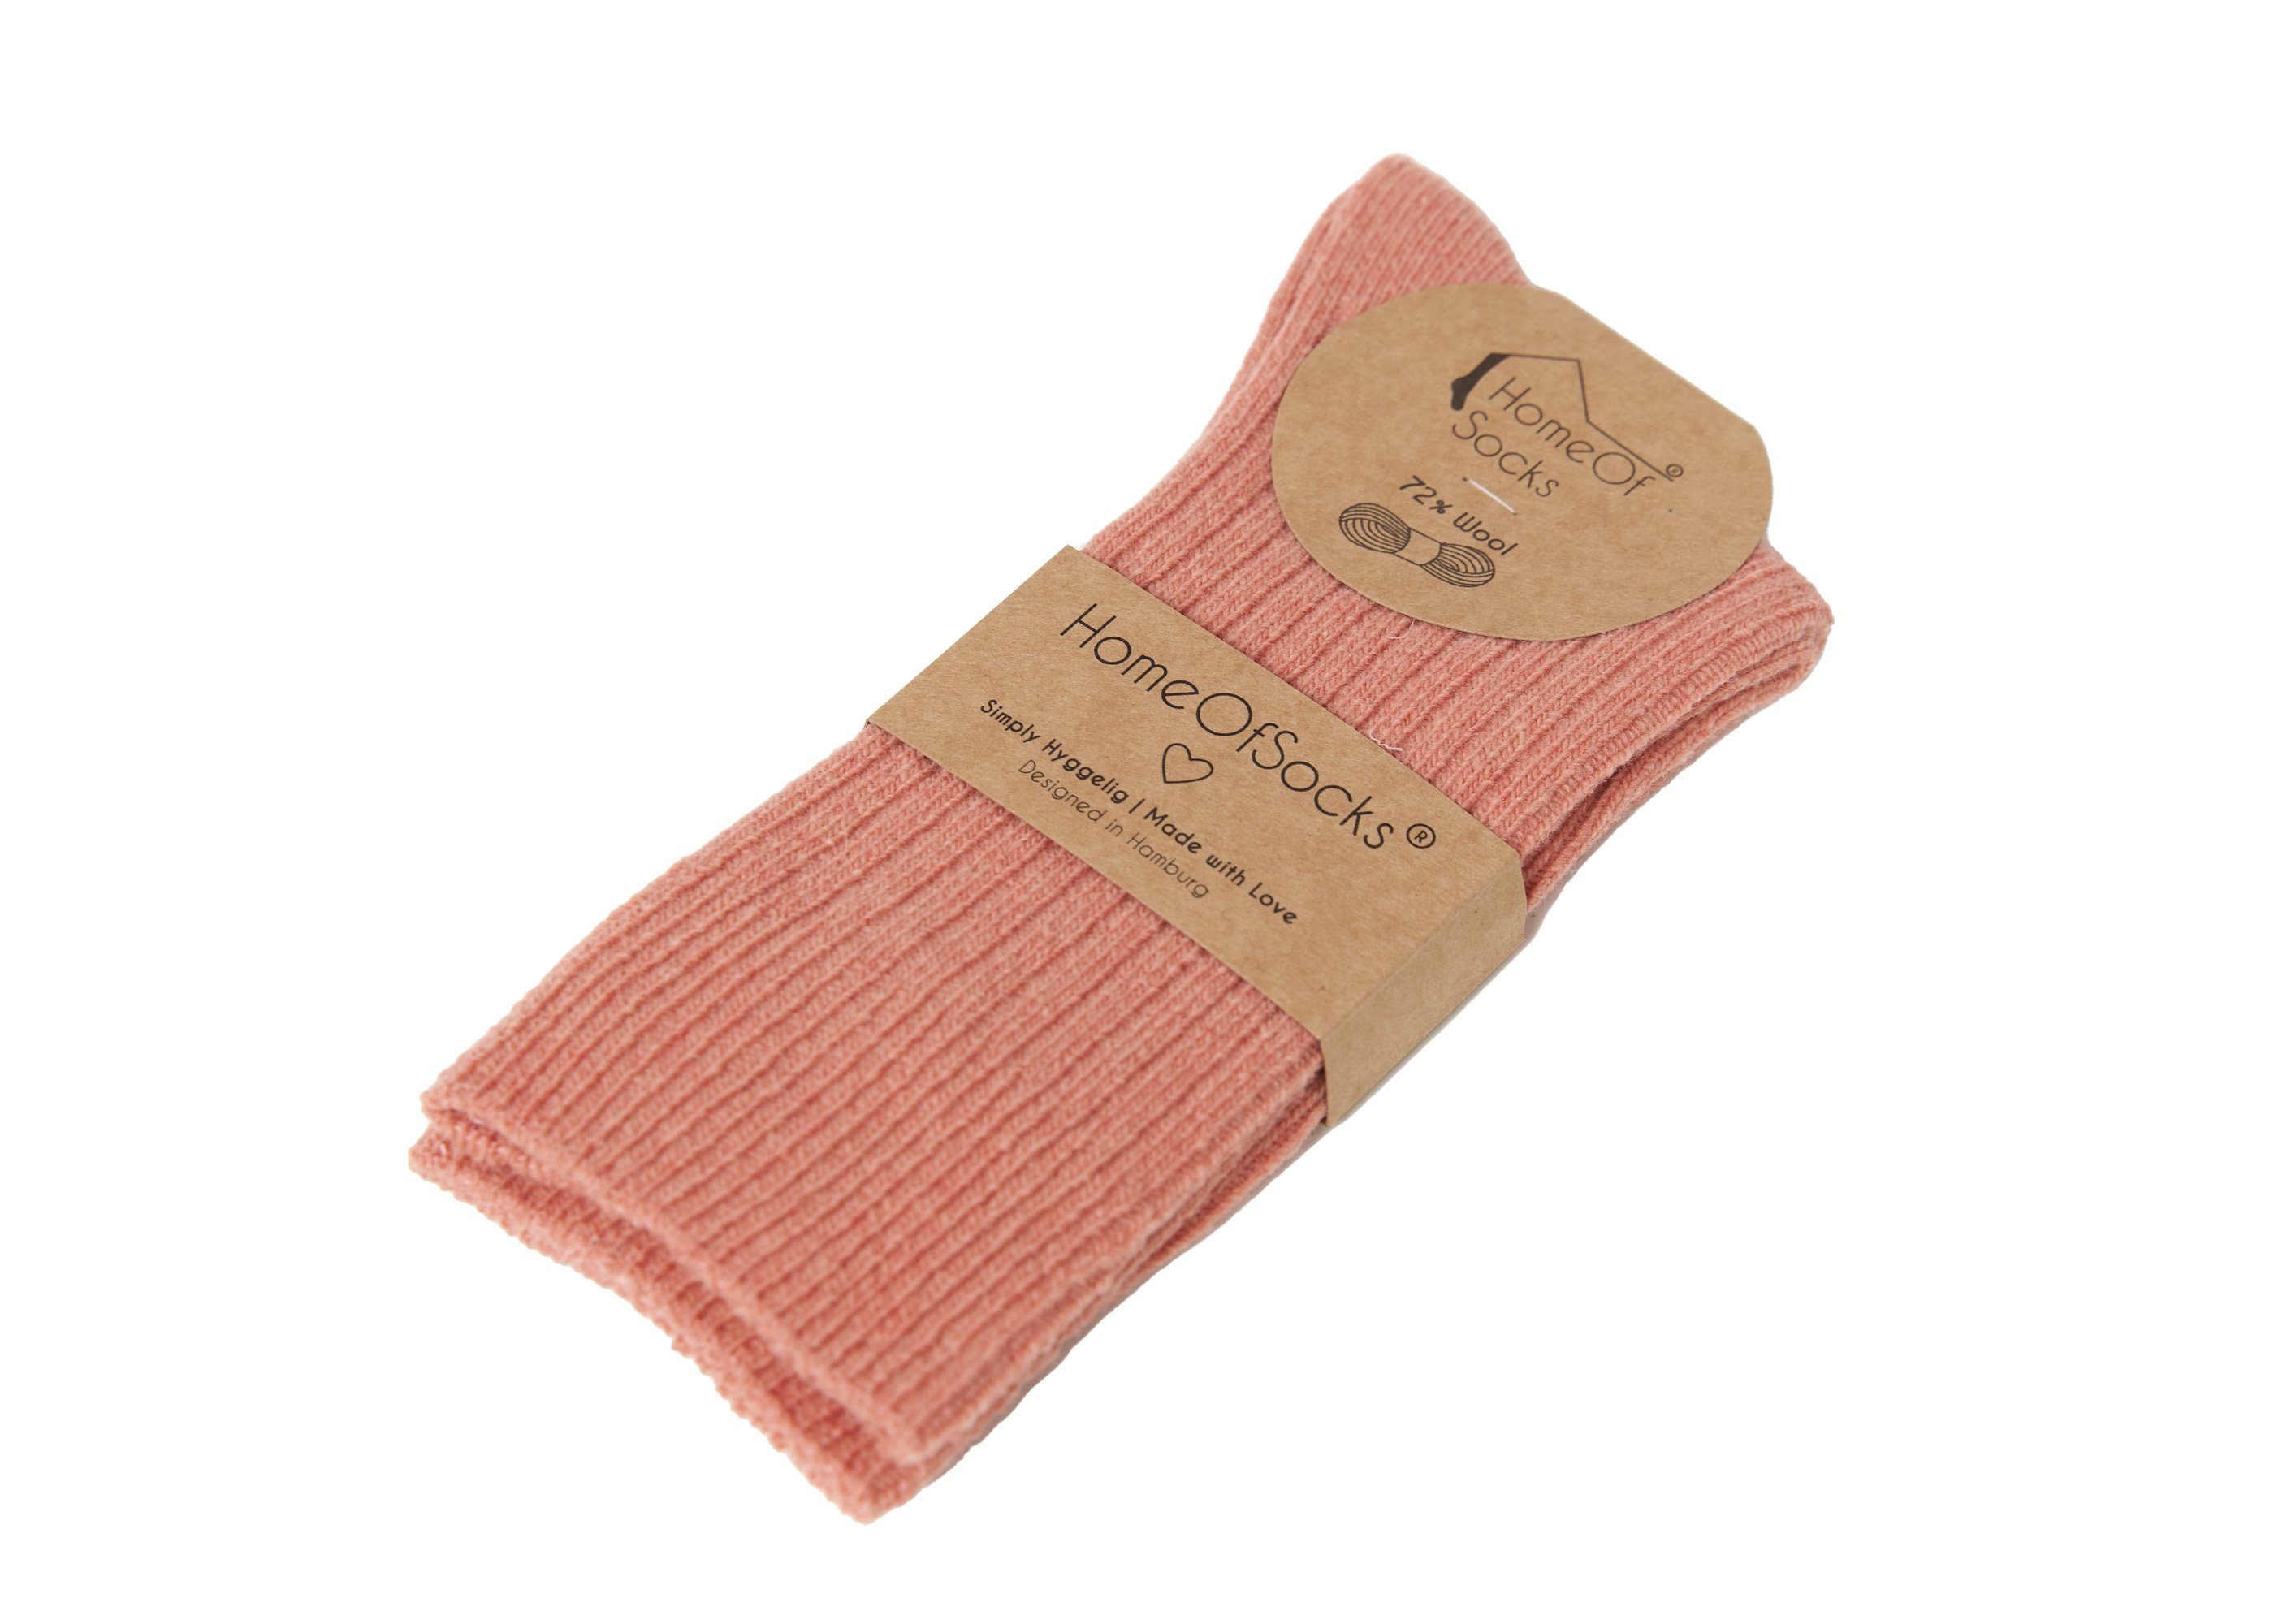 Wollanteil mit Wollsocken 72% Dünne Uni Hochwertige Wollsocken Bunte HomeOfSocks Socken Bunt Dünn Altrosa Druckarm